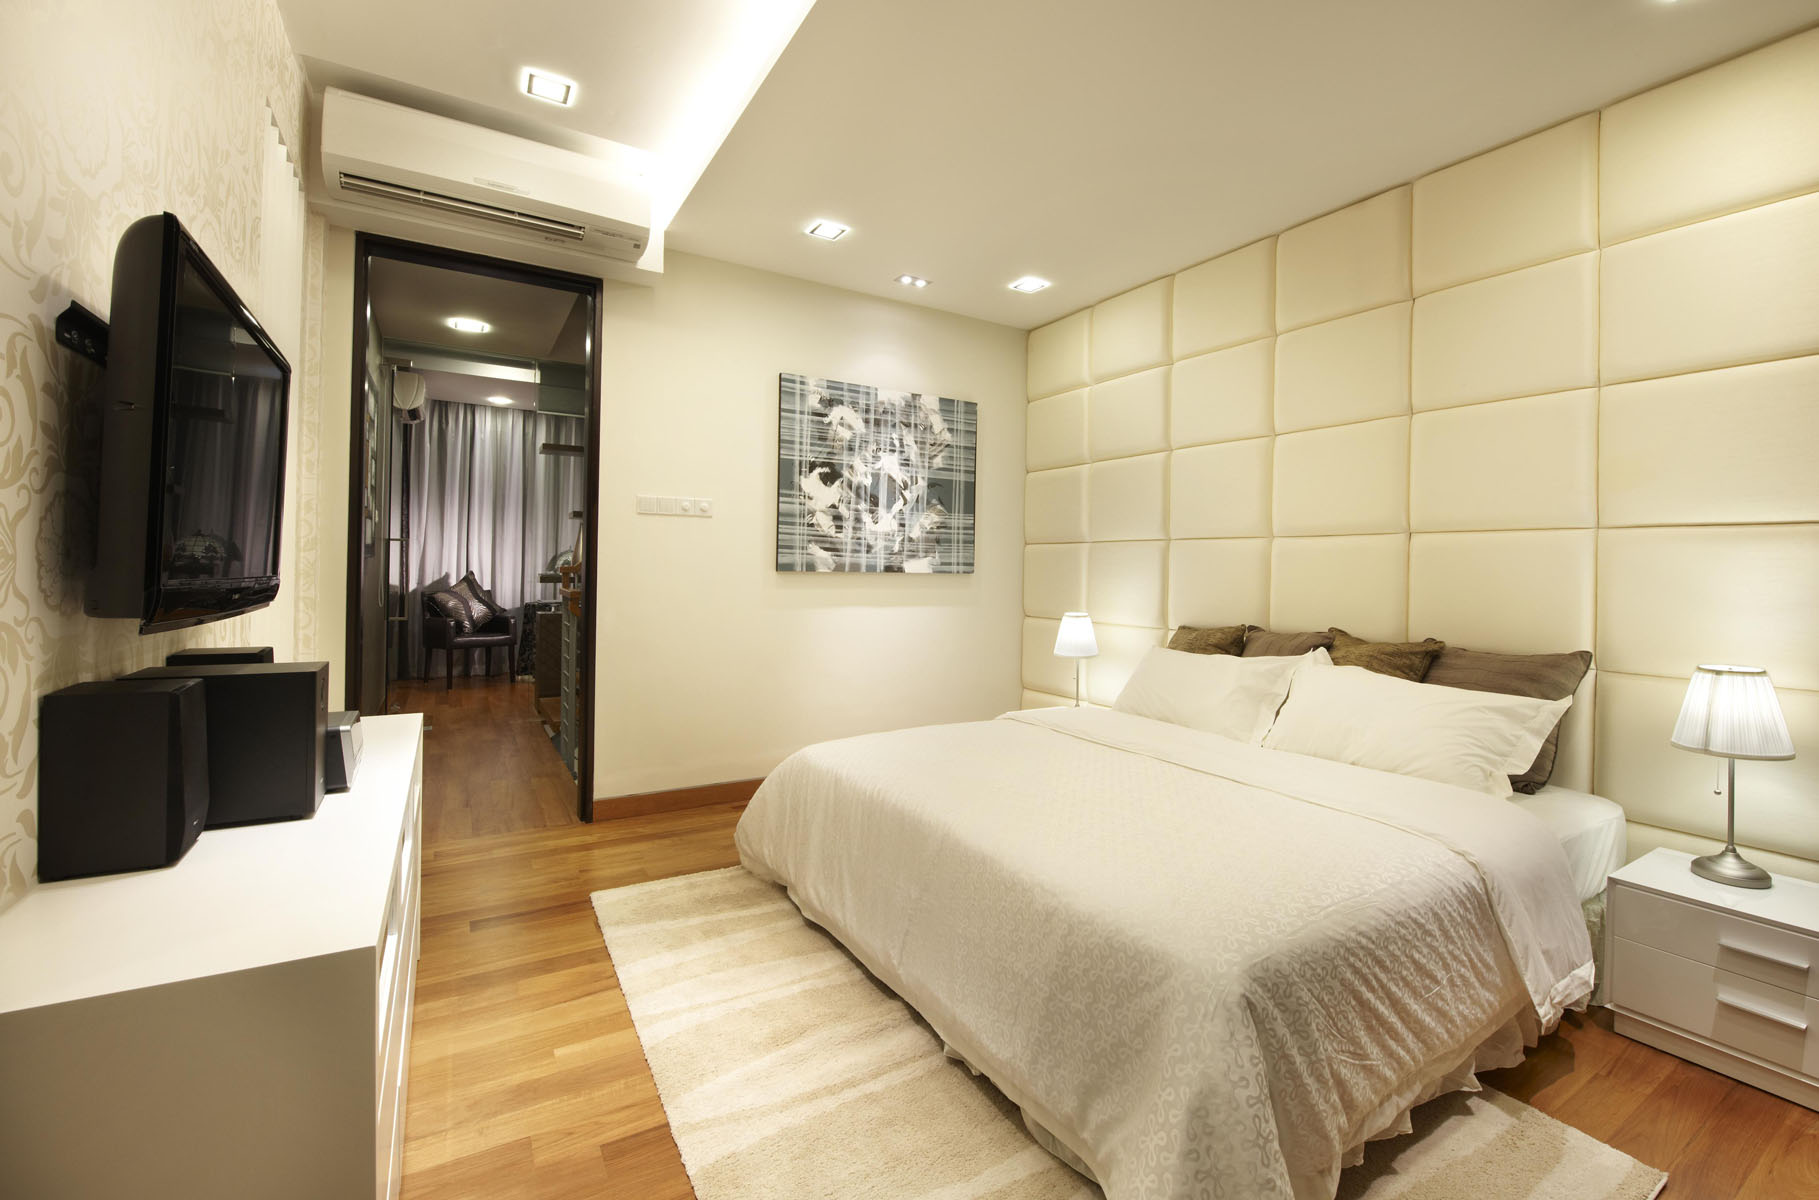 Simple and modern bedroom designs